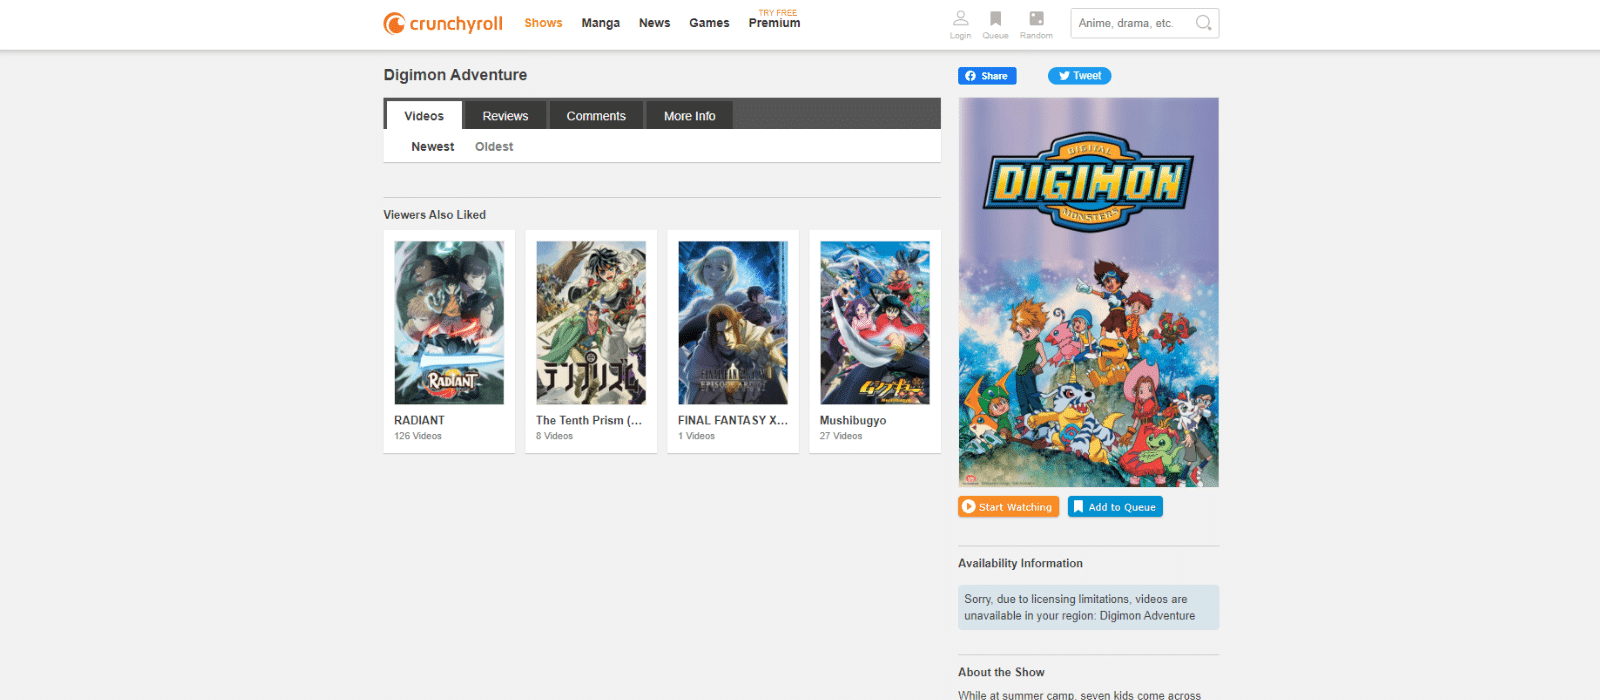 Digimon Adventure Crunchyroll